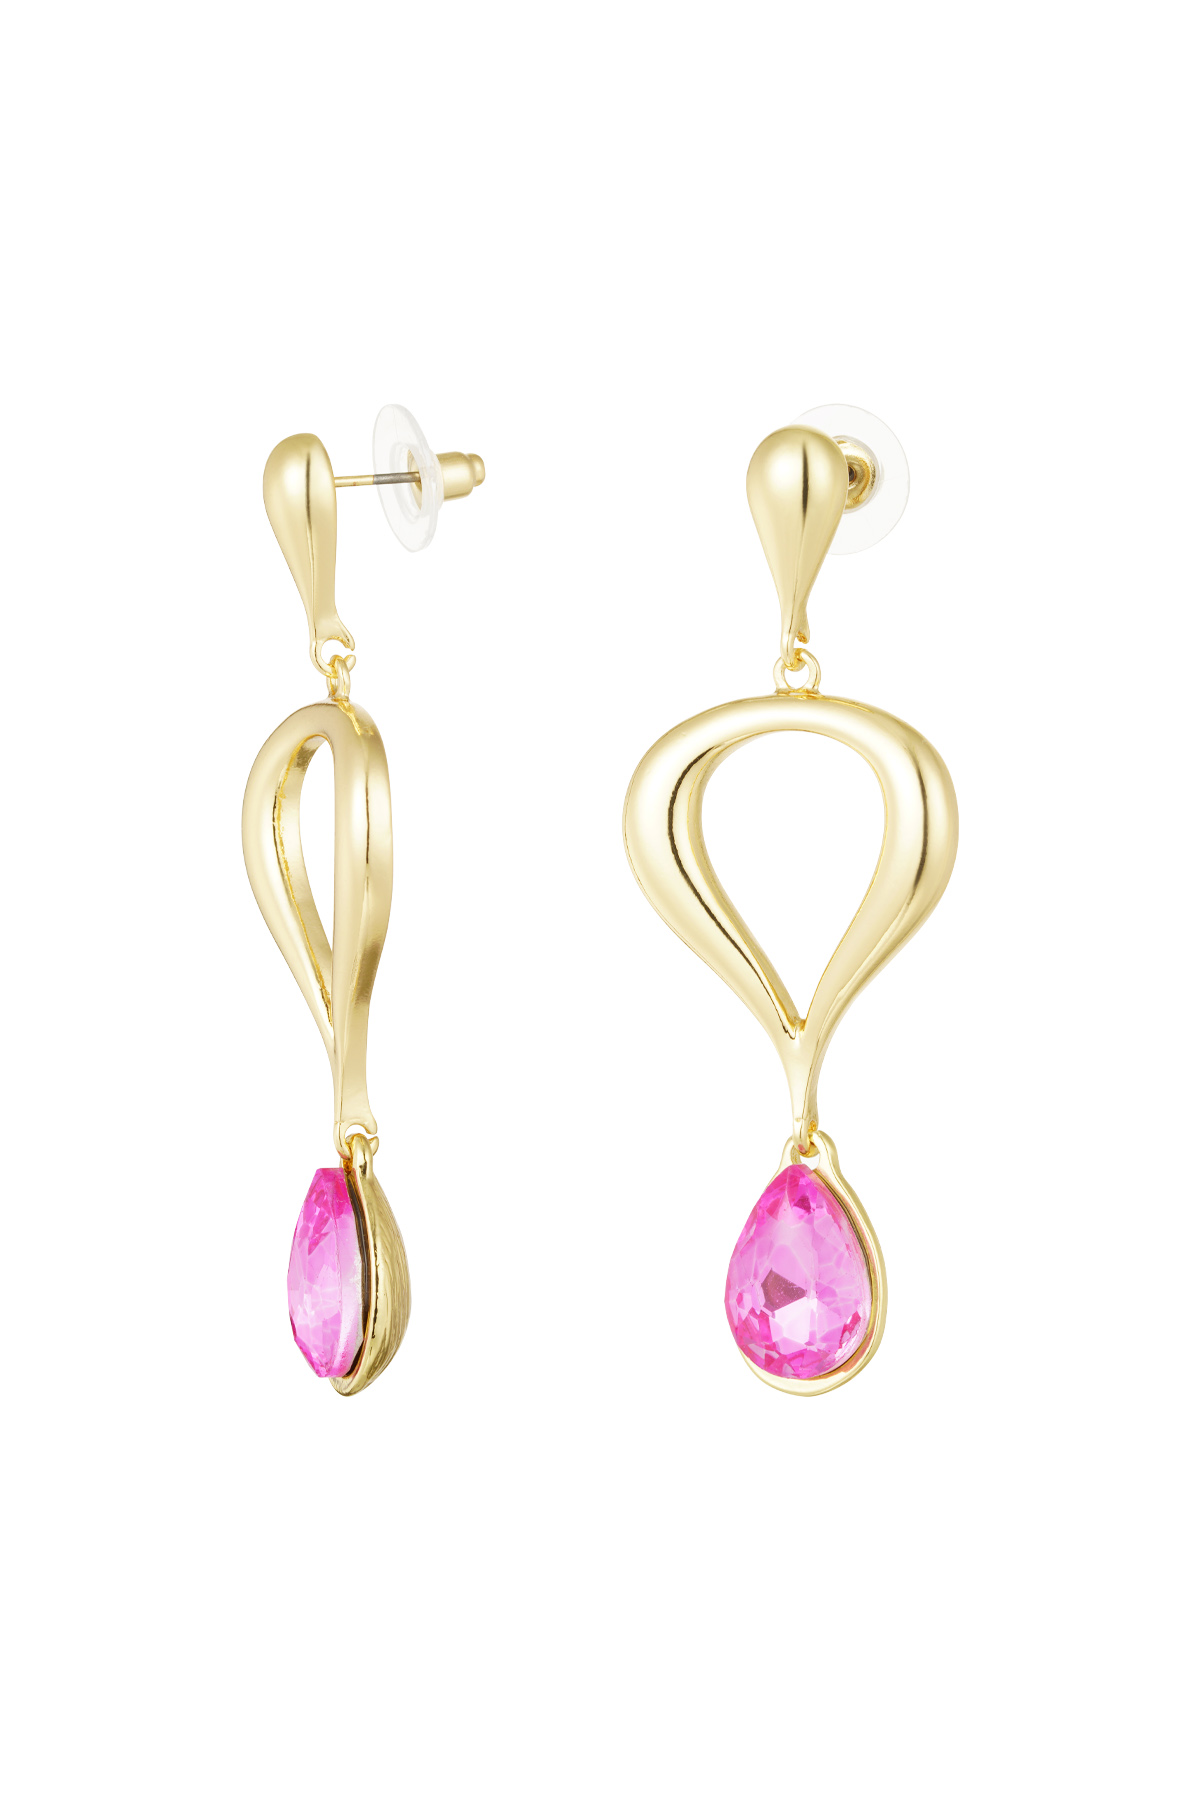 Klassischer Ohrring mit farbigem Anhänger – Rosa, Gold